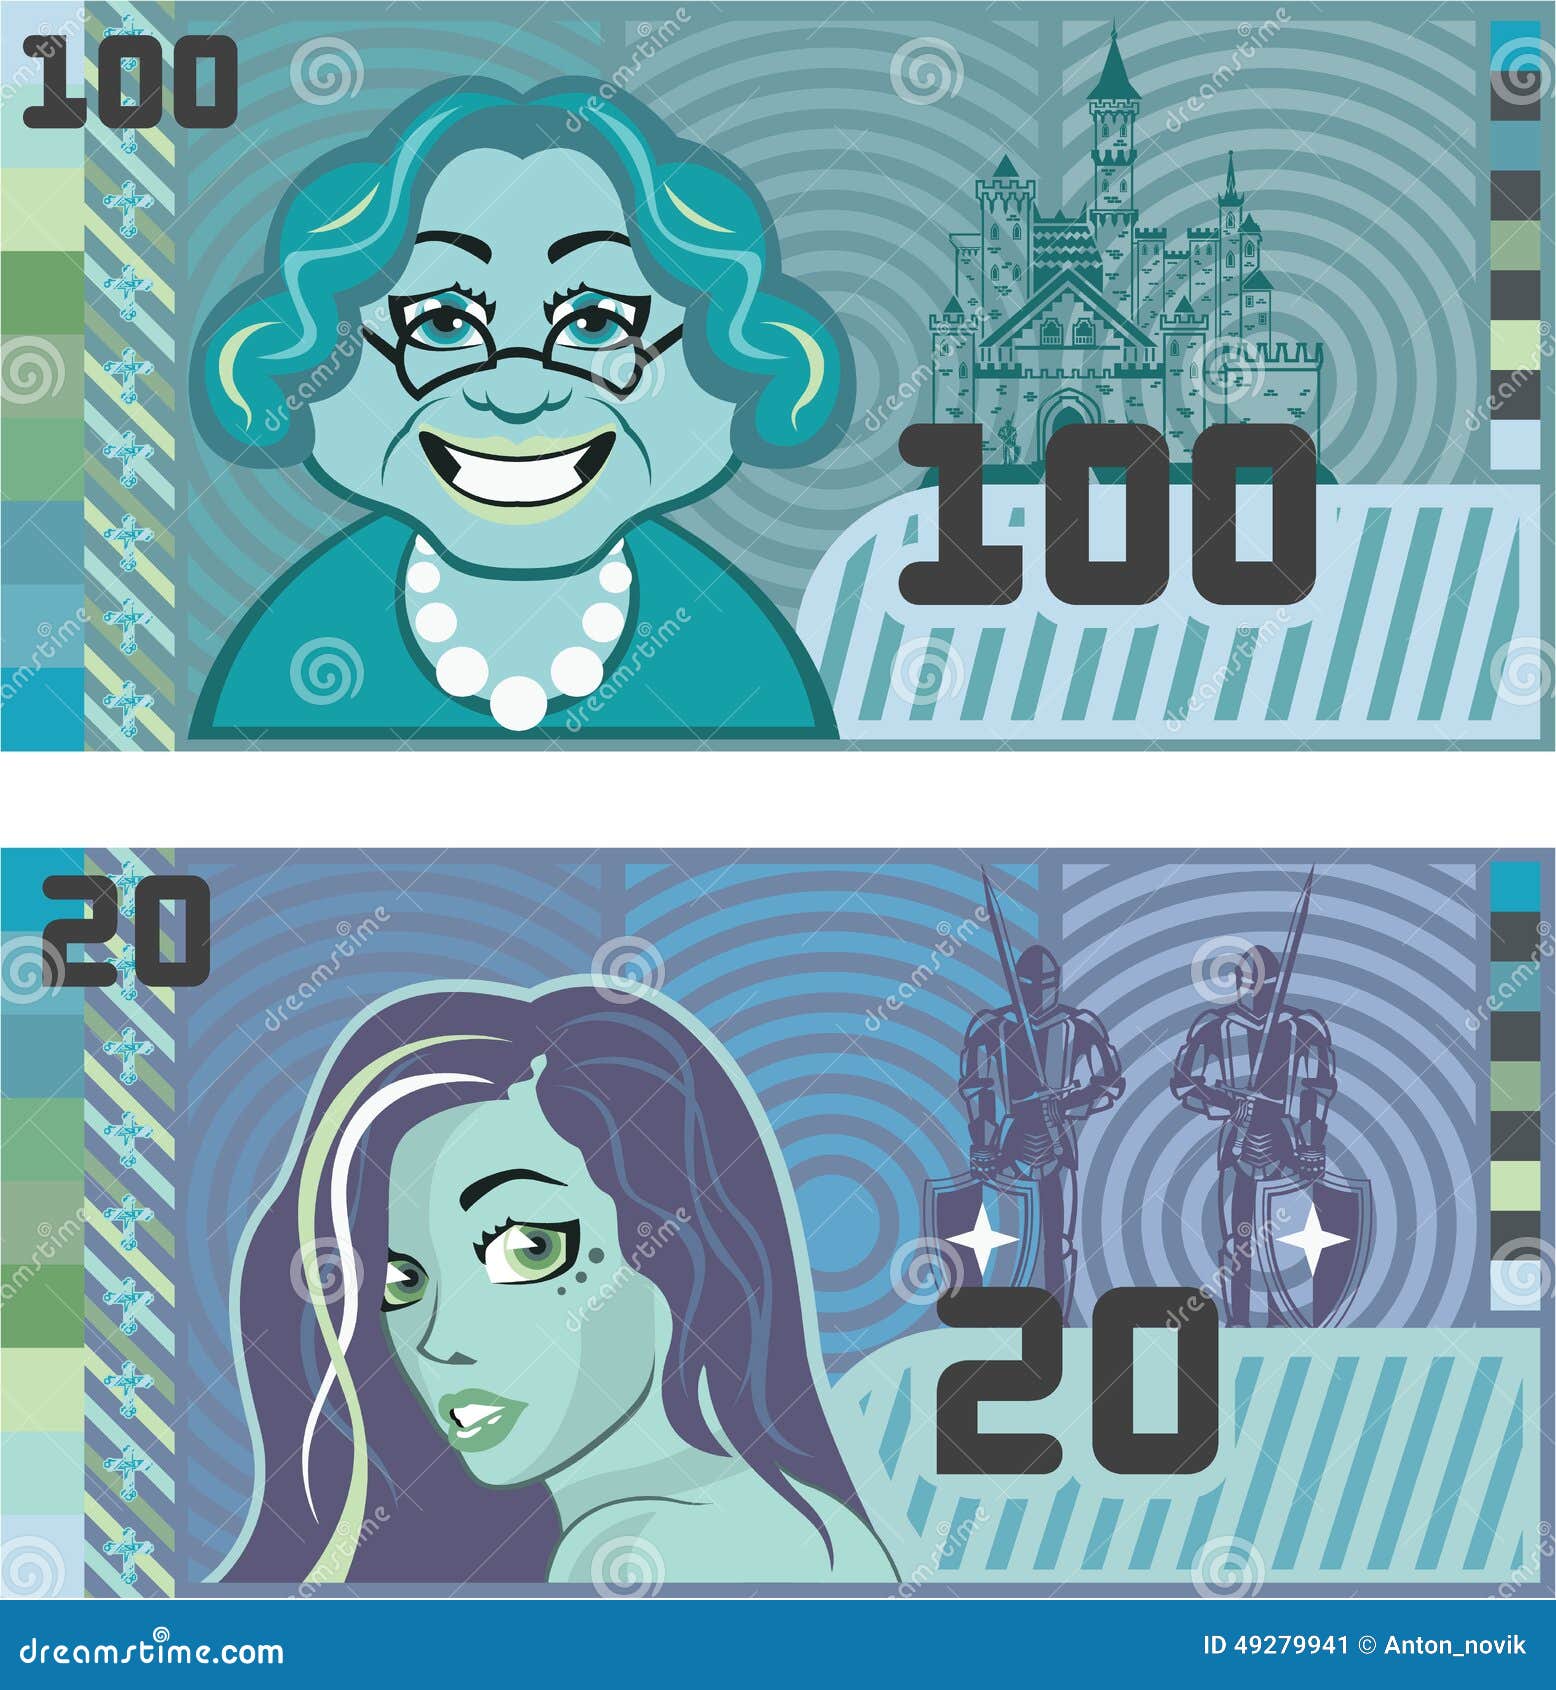 clipart of fake money - photo #14